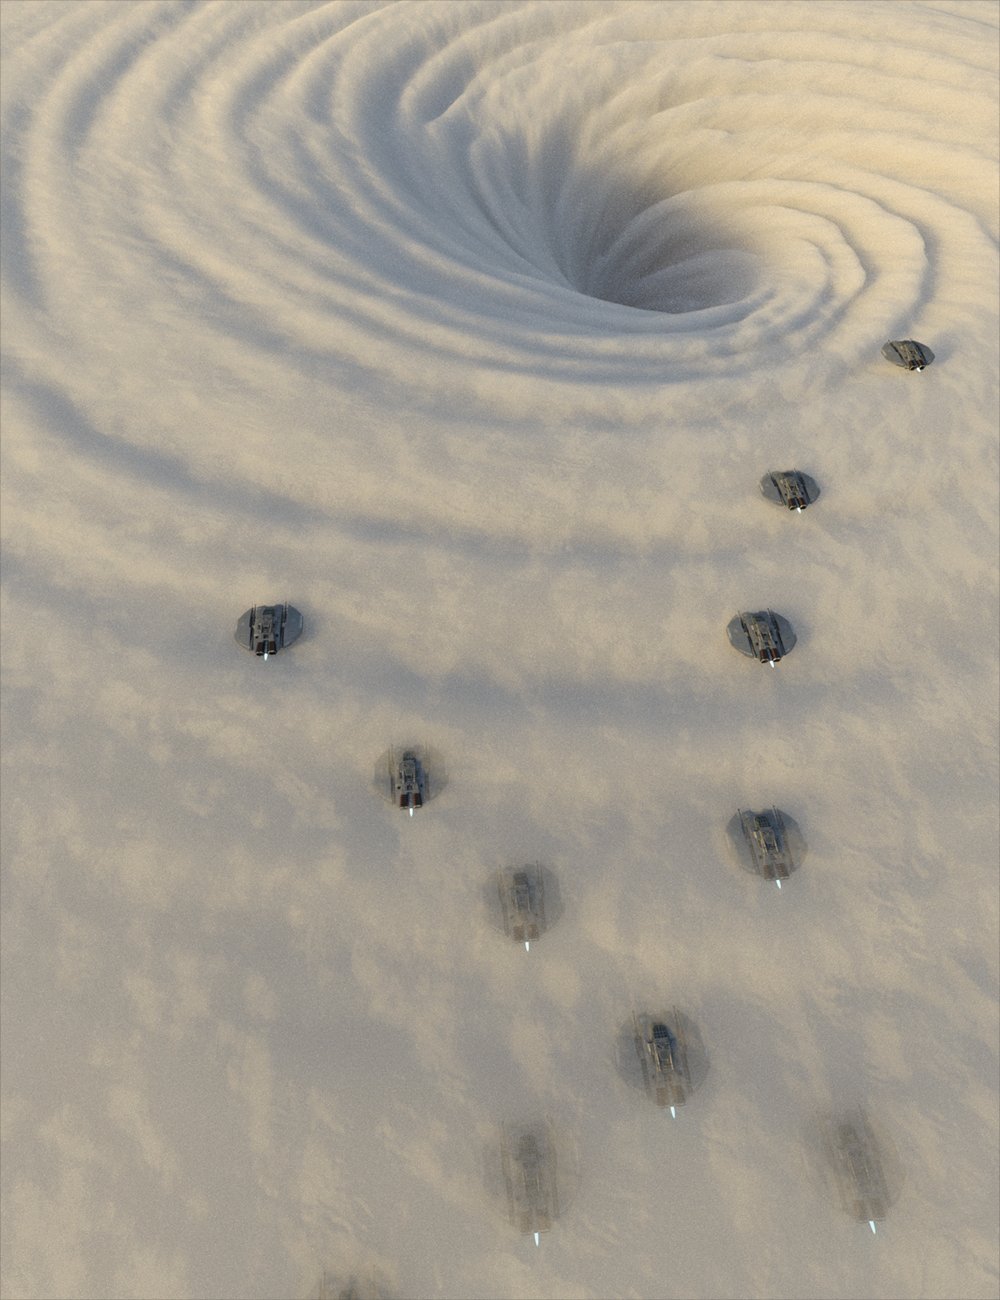 Tornado of the Four Elements by: Marshian, 3D Models by Daz 3D